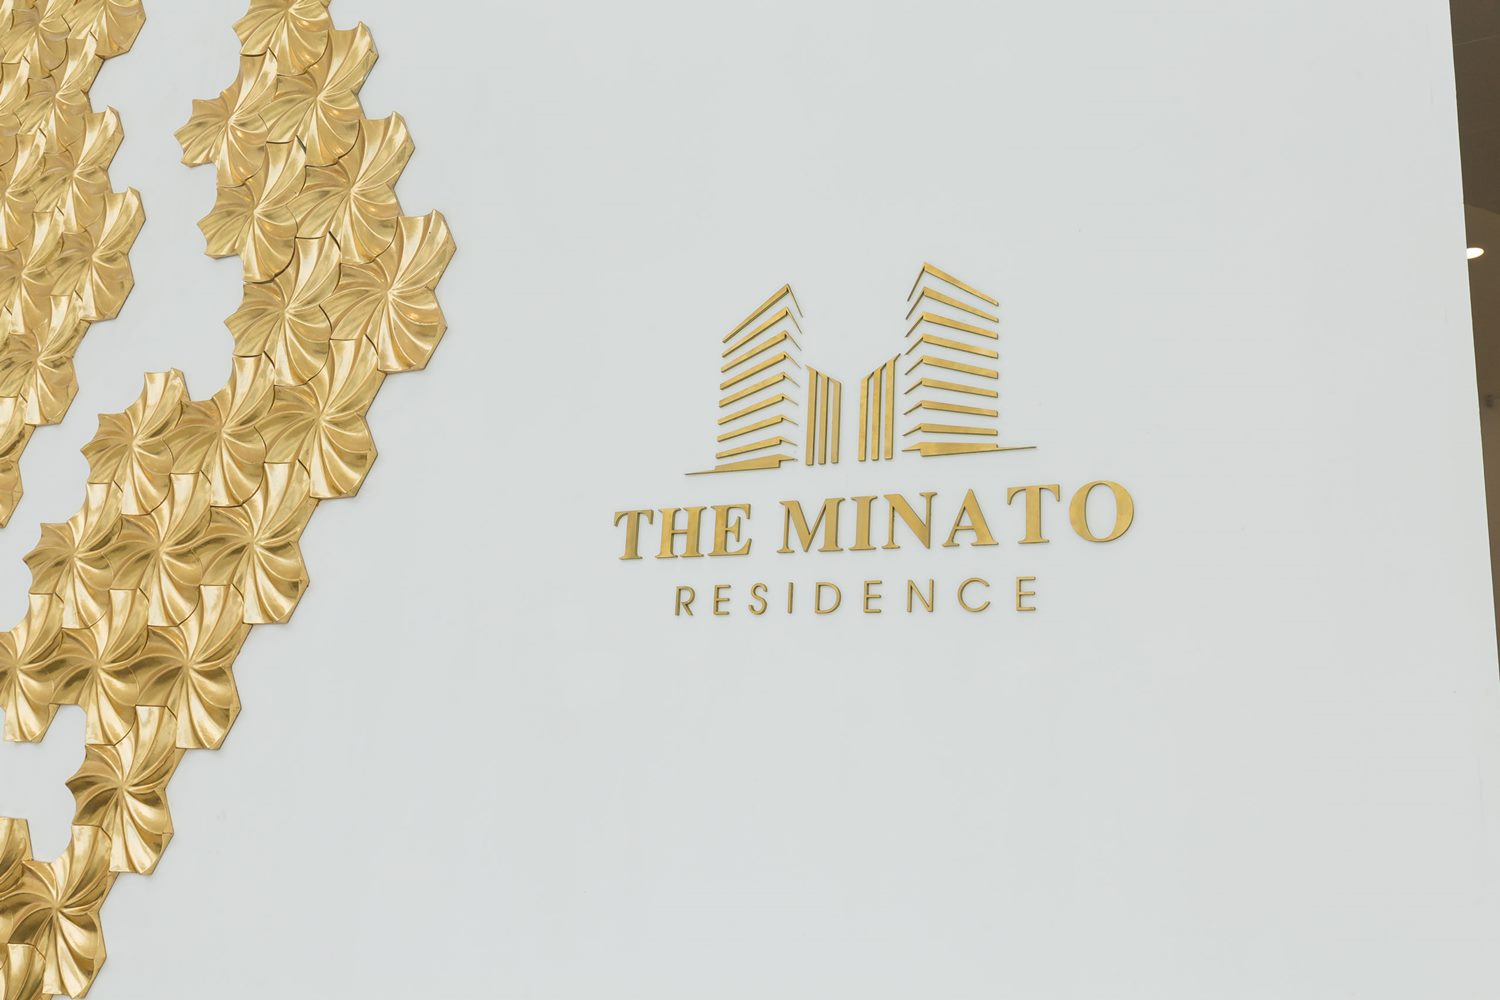 The Minato Residence